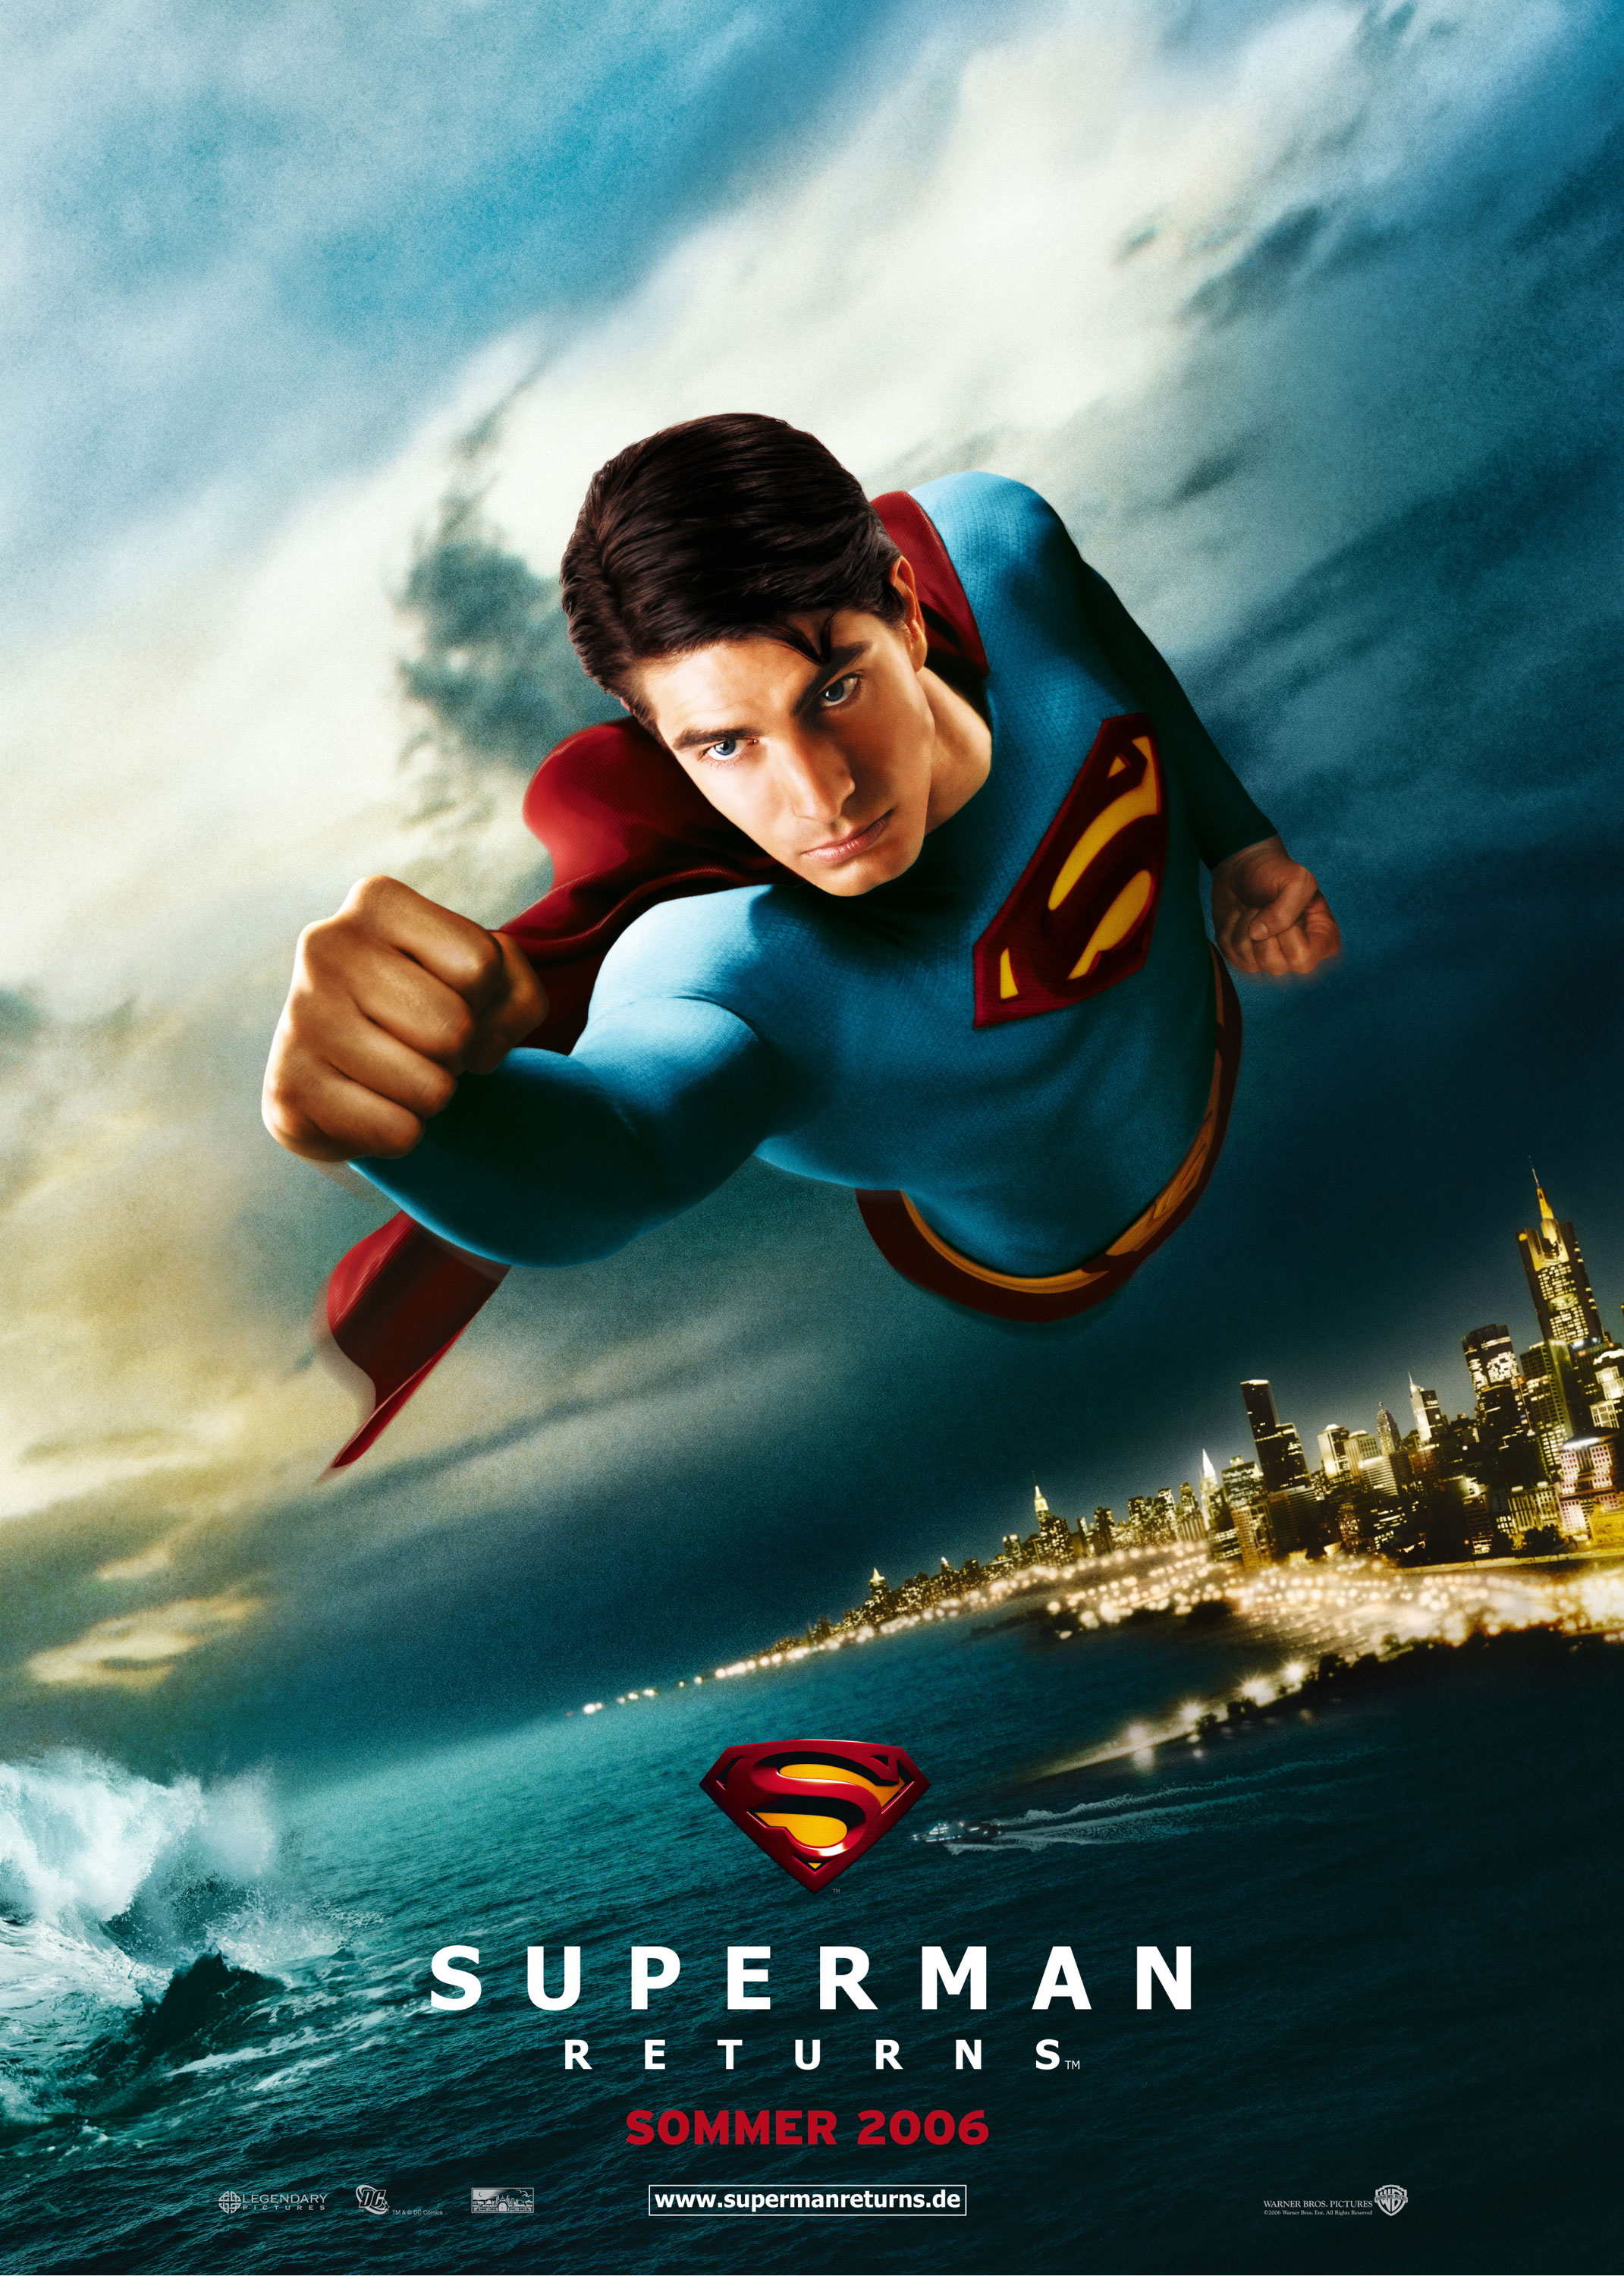 Superman returns. Возвращение Супермена 2006 Постер. Возвращение Супермена 2006 обложка.